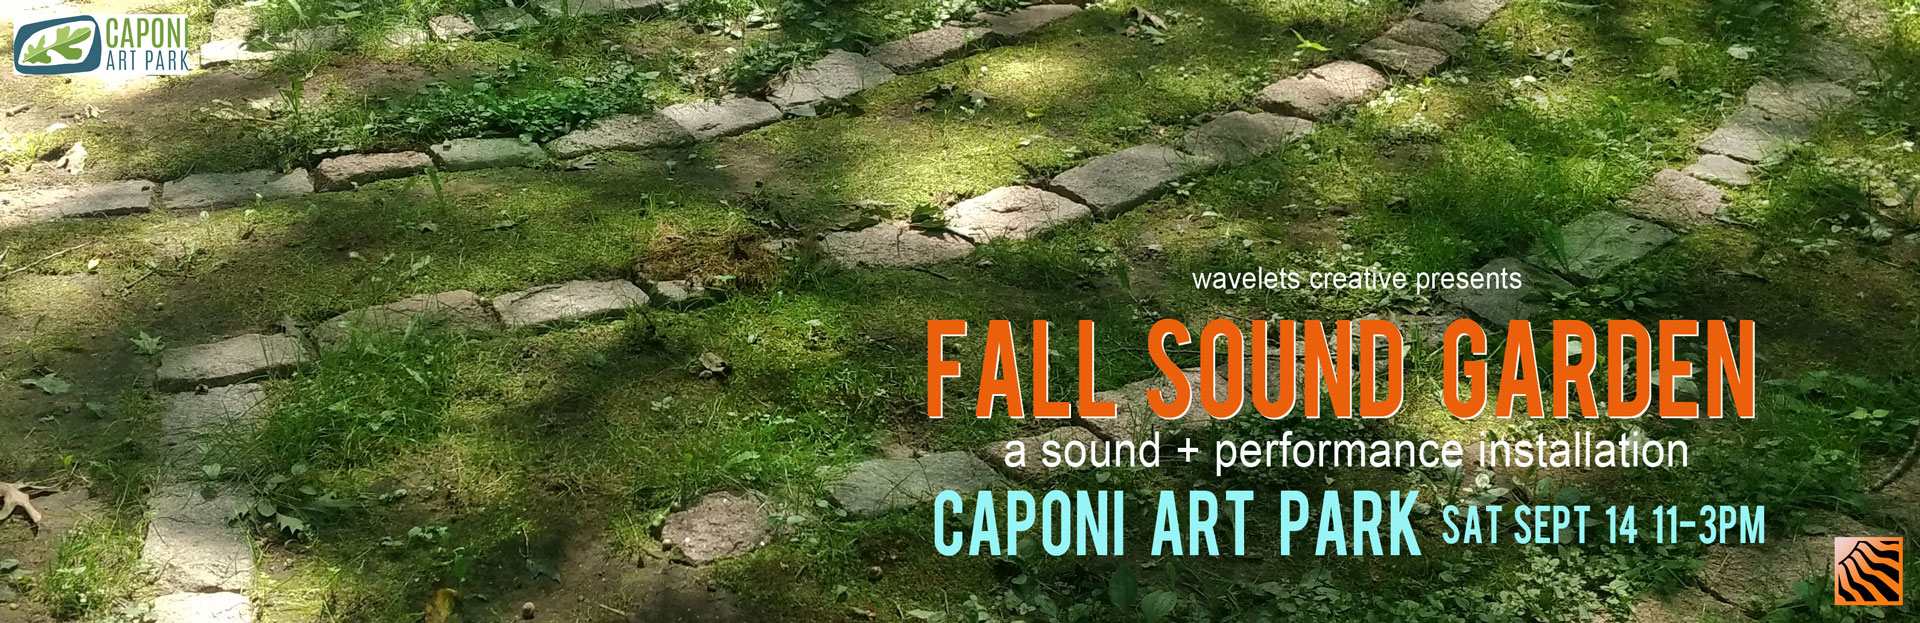 Fall Sound Garden at Caponi Art Park